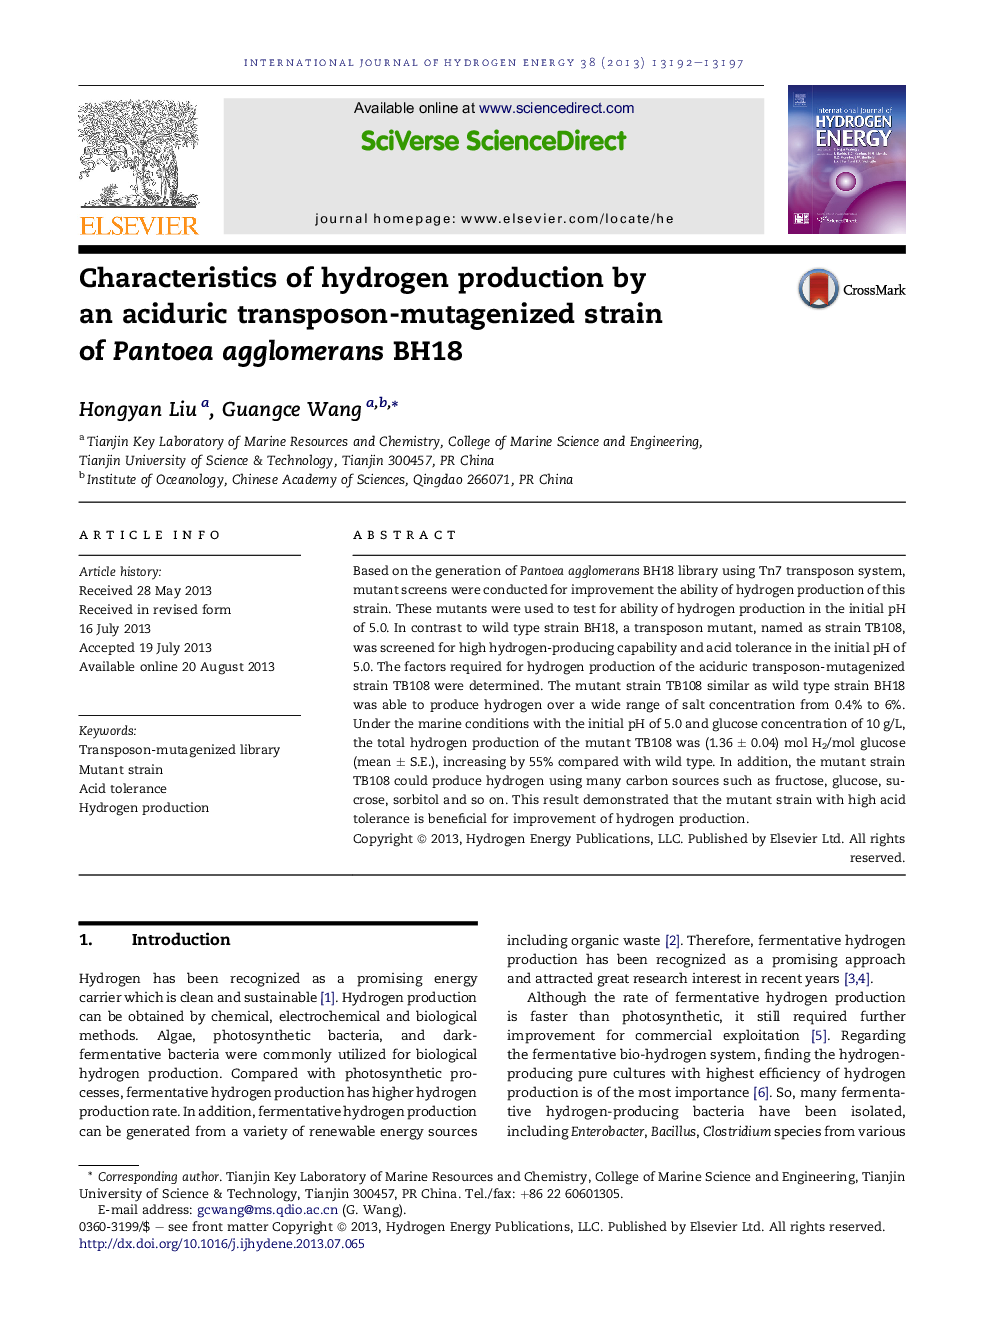 Characteristics of hydrogen production by an aciduric transposon-mutagenized strain of Pantoea agglomerans BH18